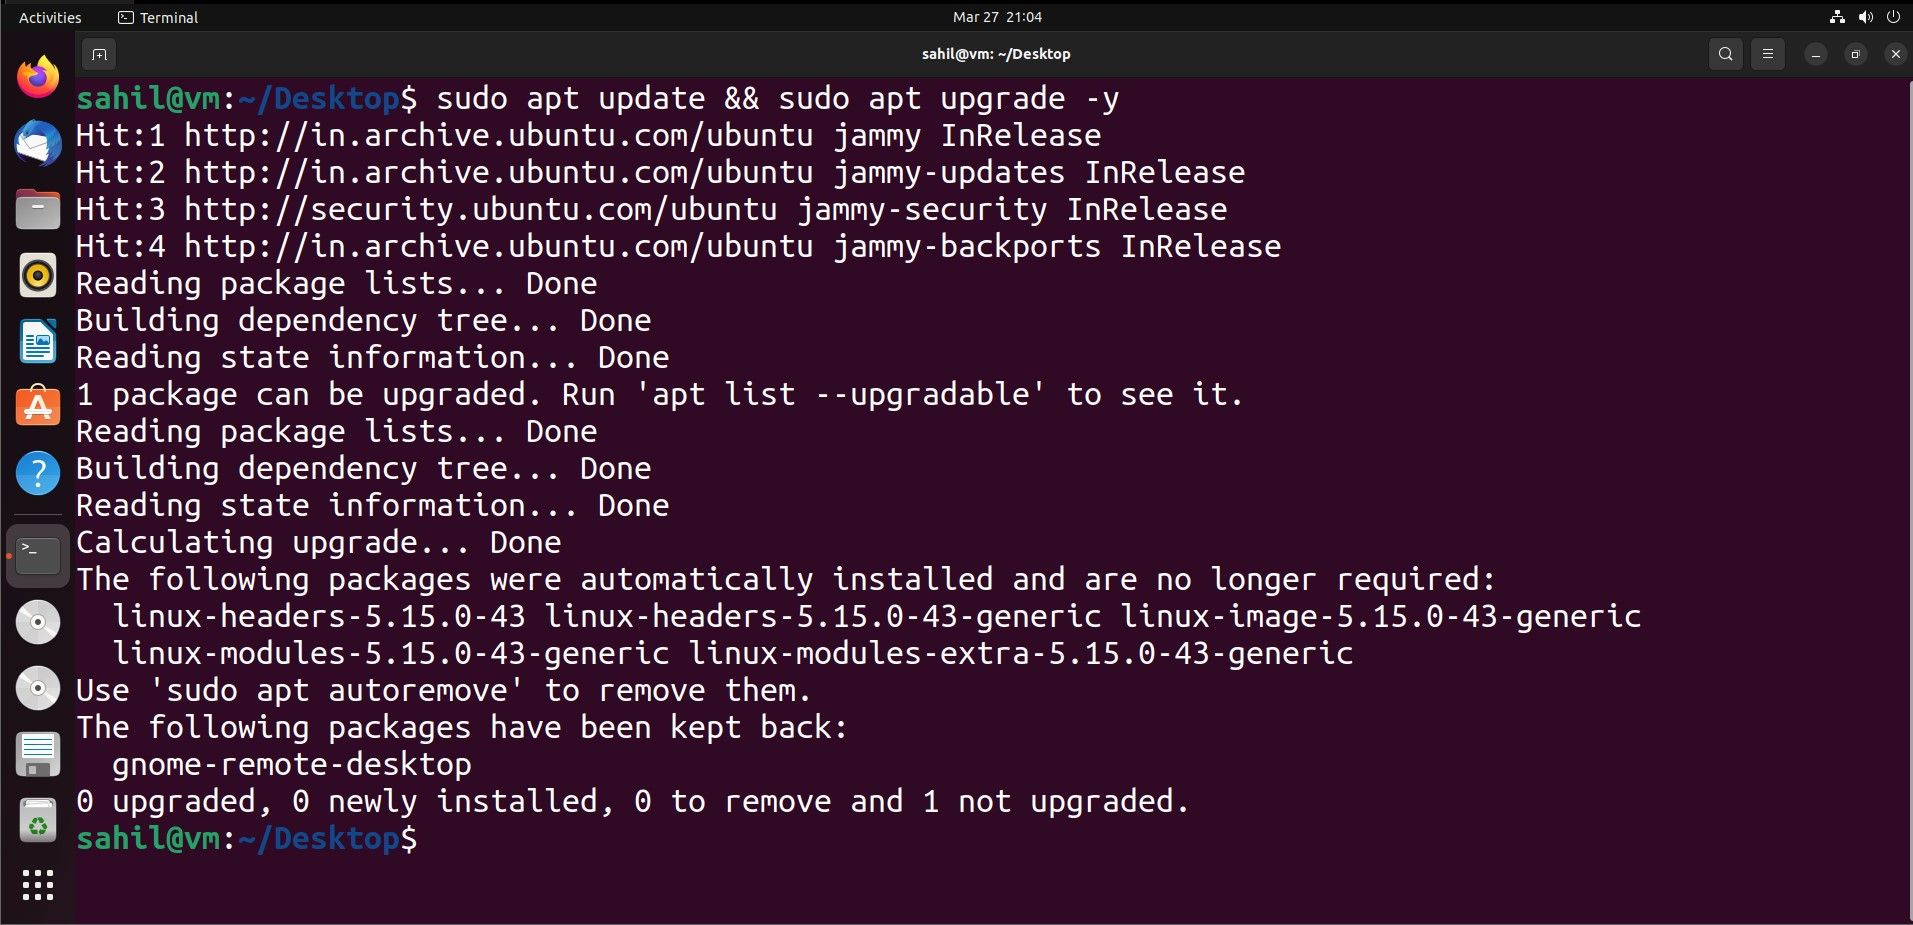 Linux Ubuntu terminal interface showing update commands